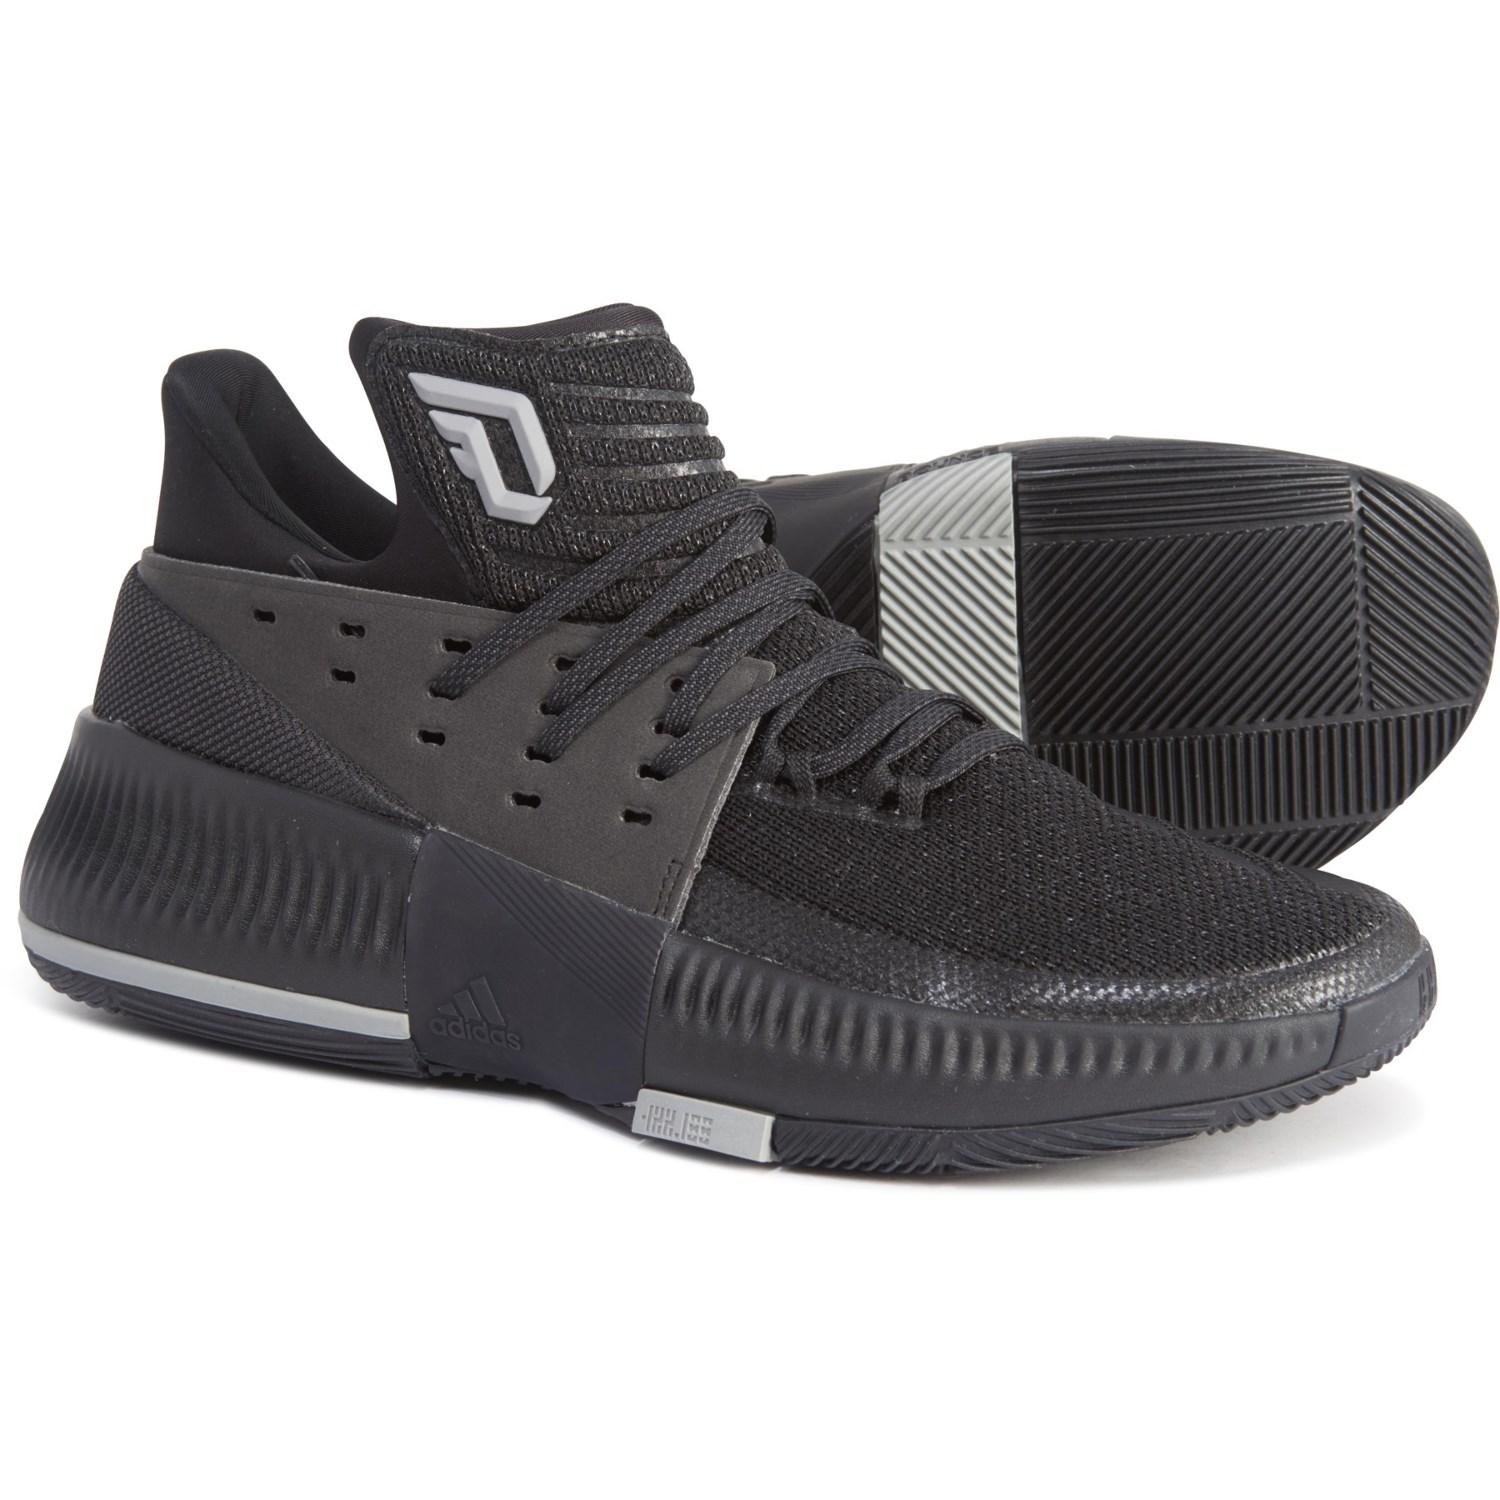 adidas Damian Lillard 3 Basketball Shoes in Black for Men